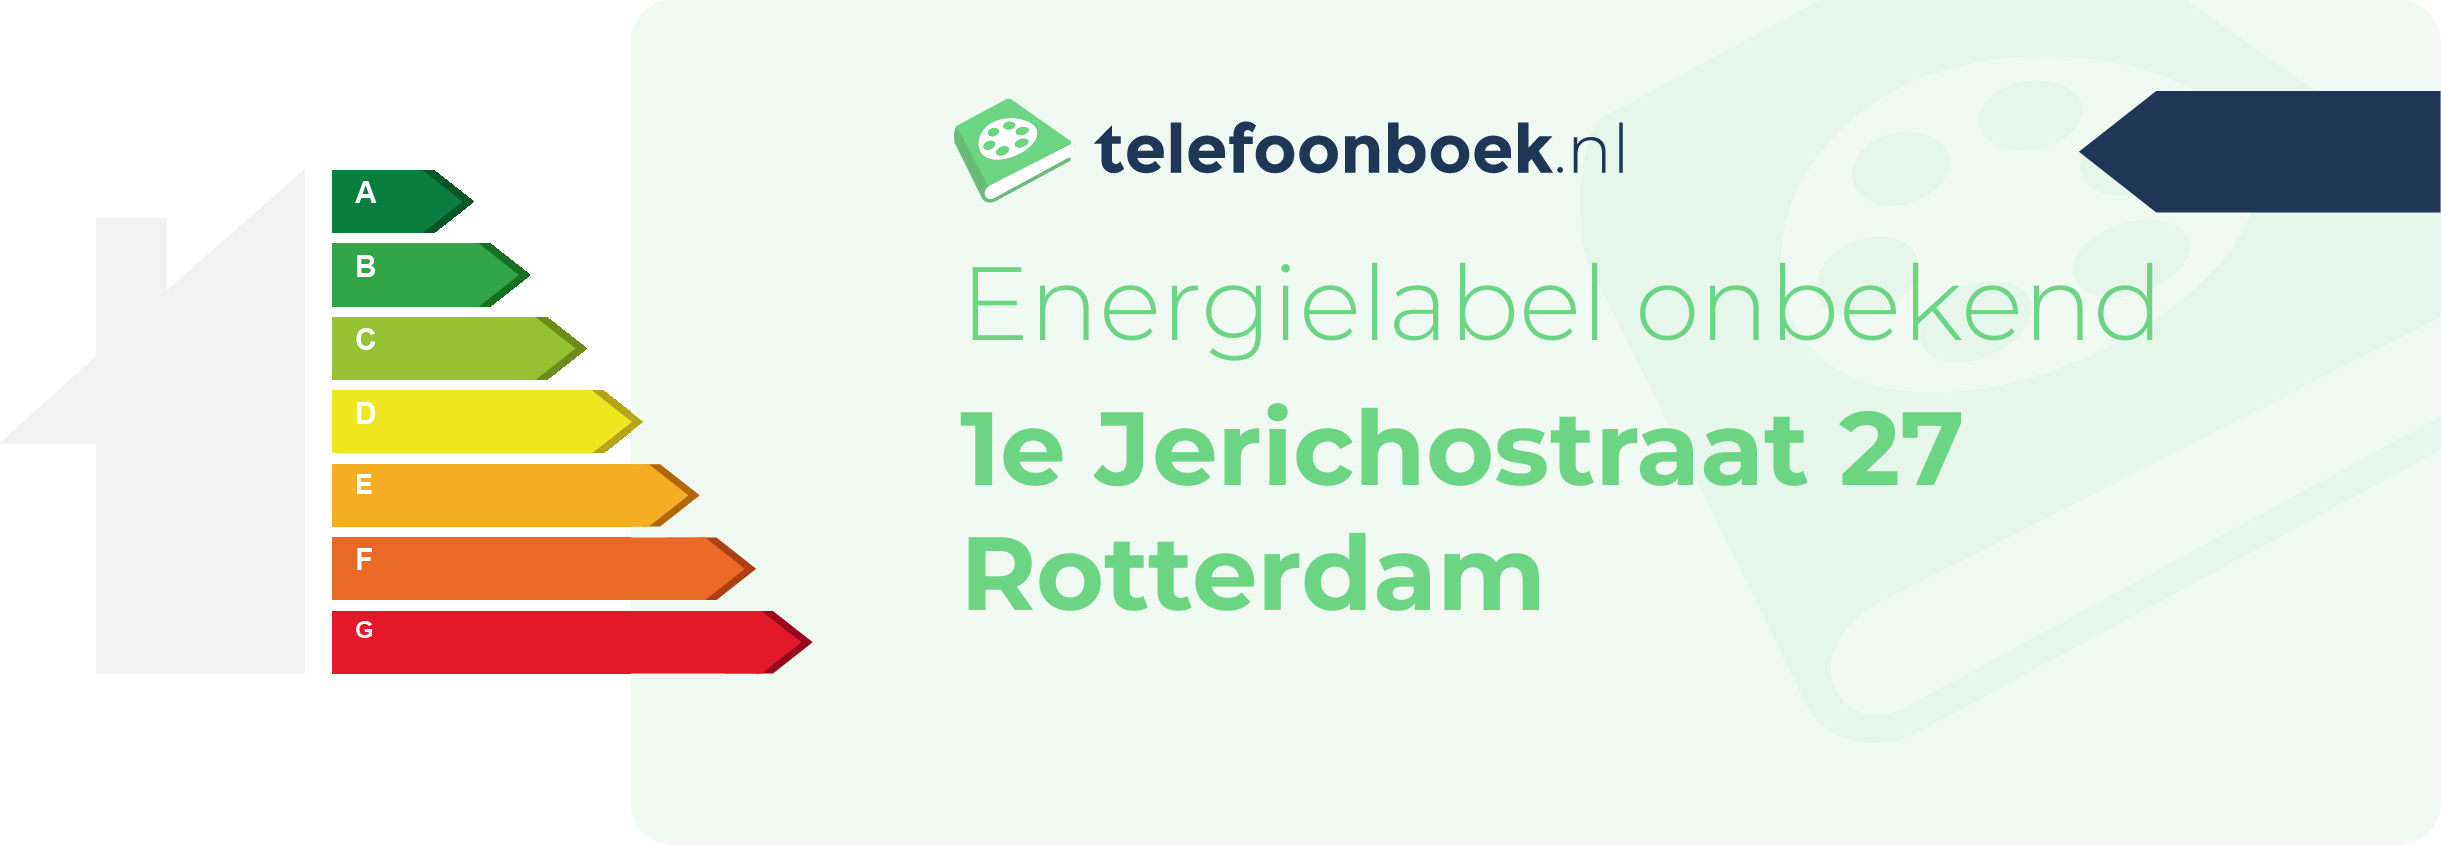 Energielabel 1e Jerichostraat 27 Rotterdam